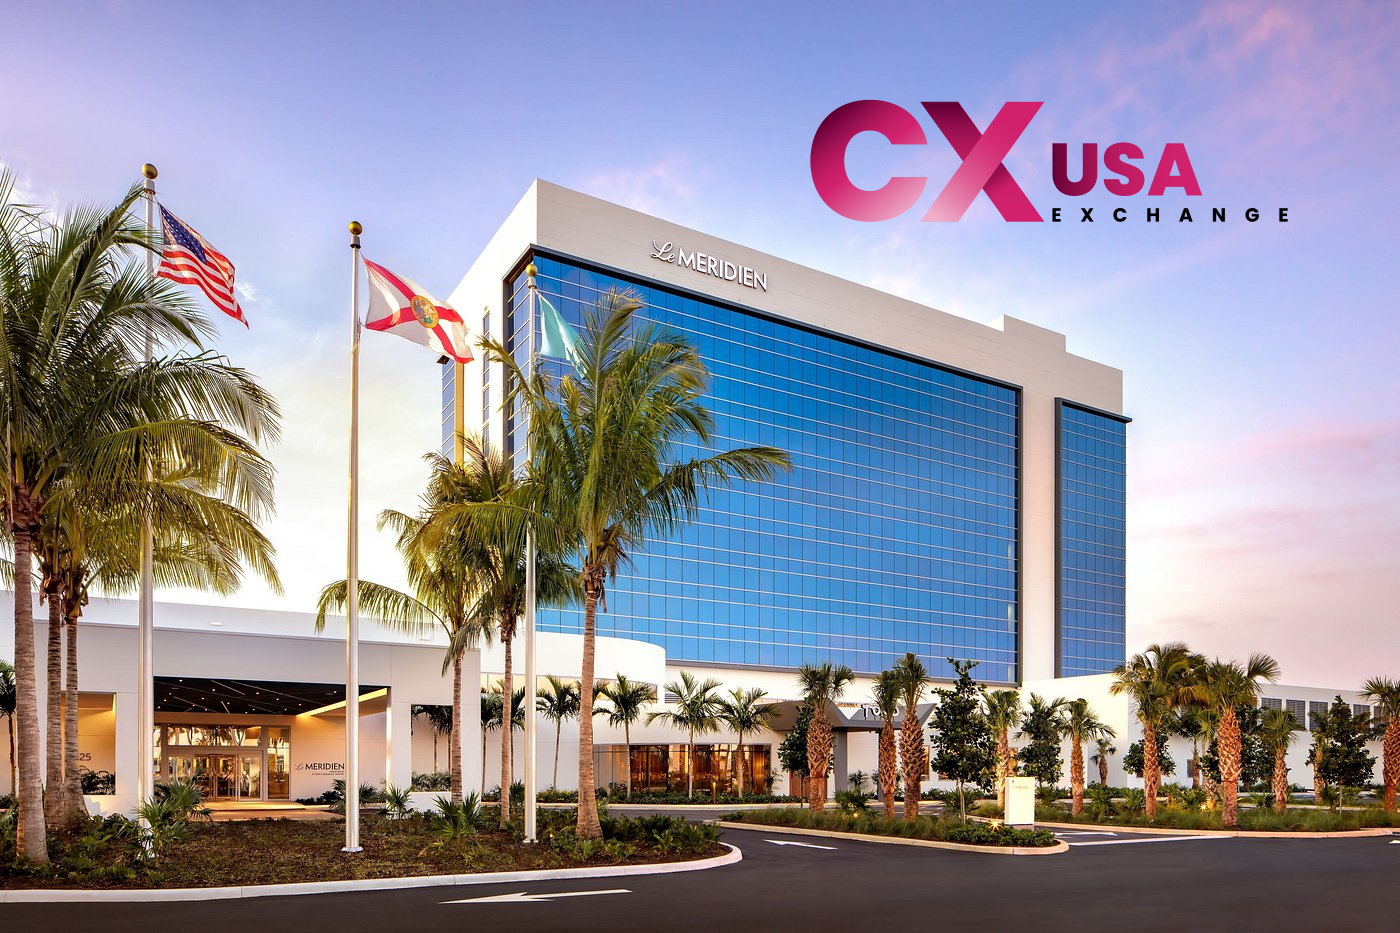 Omilia at CX USA Exchange